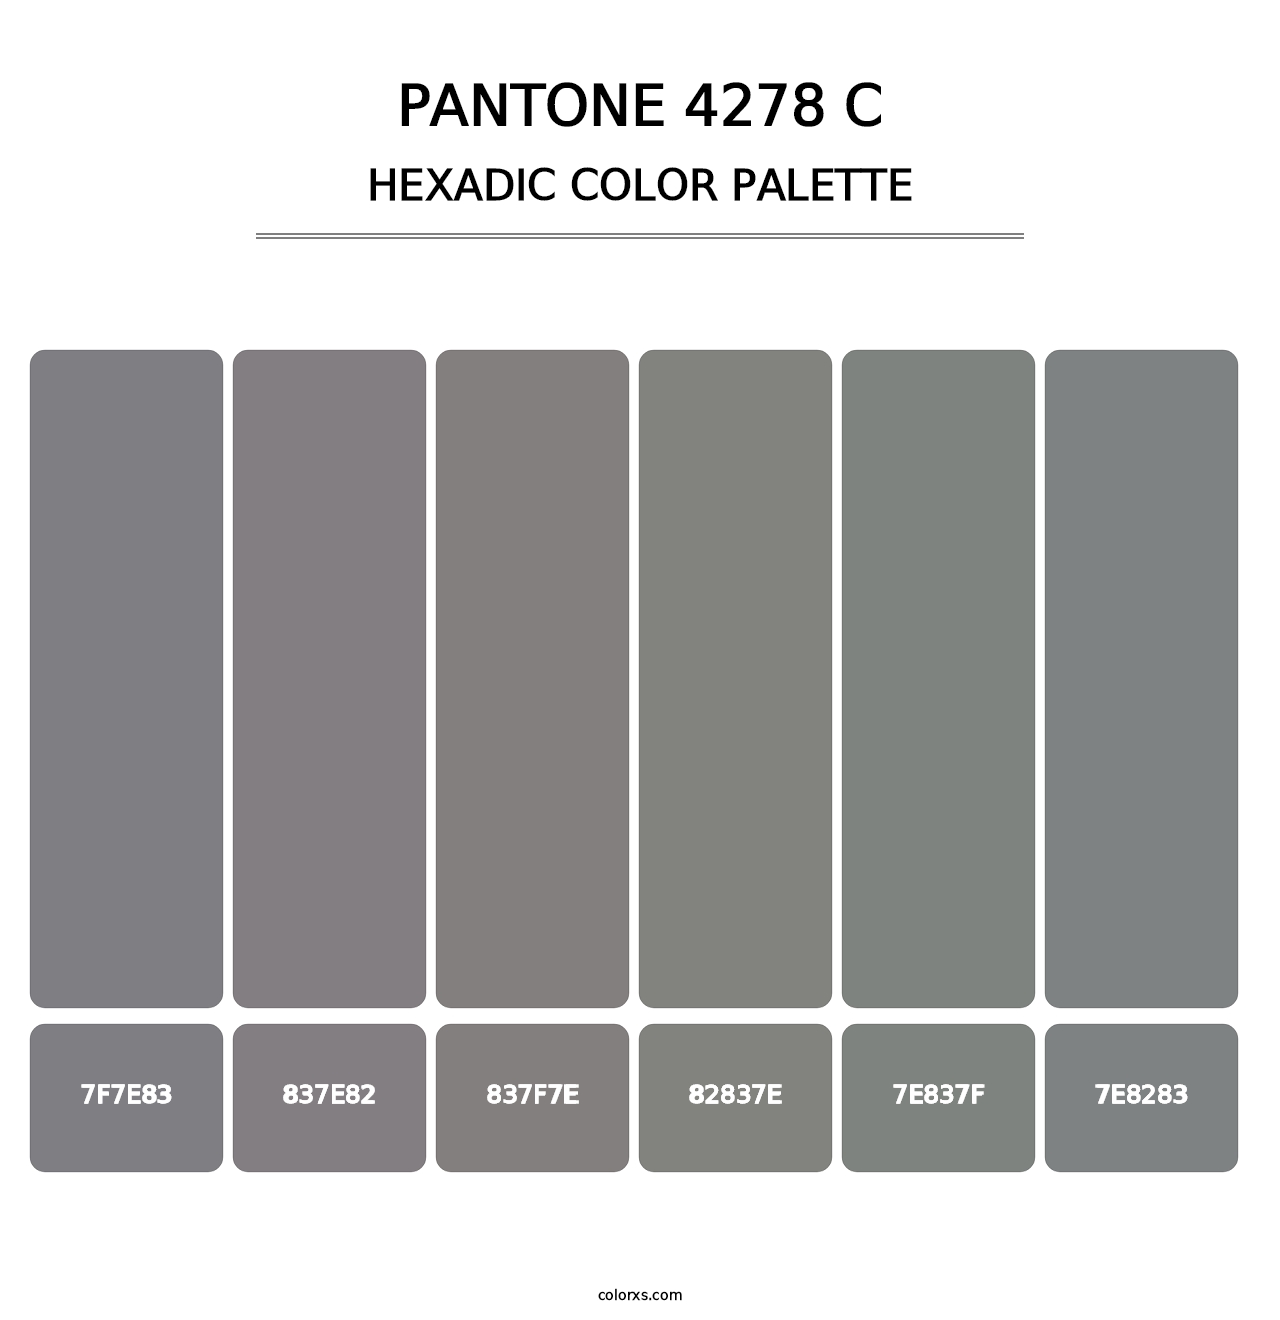 PANTONE 4278 C - Hexadic Color Palette